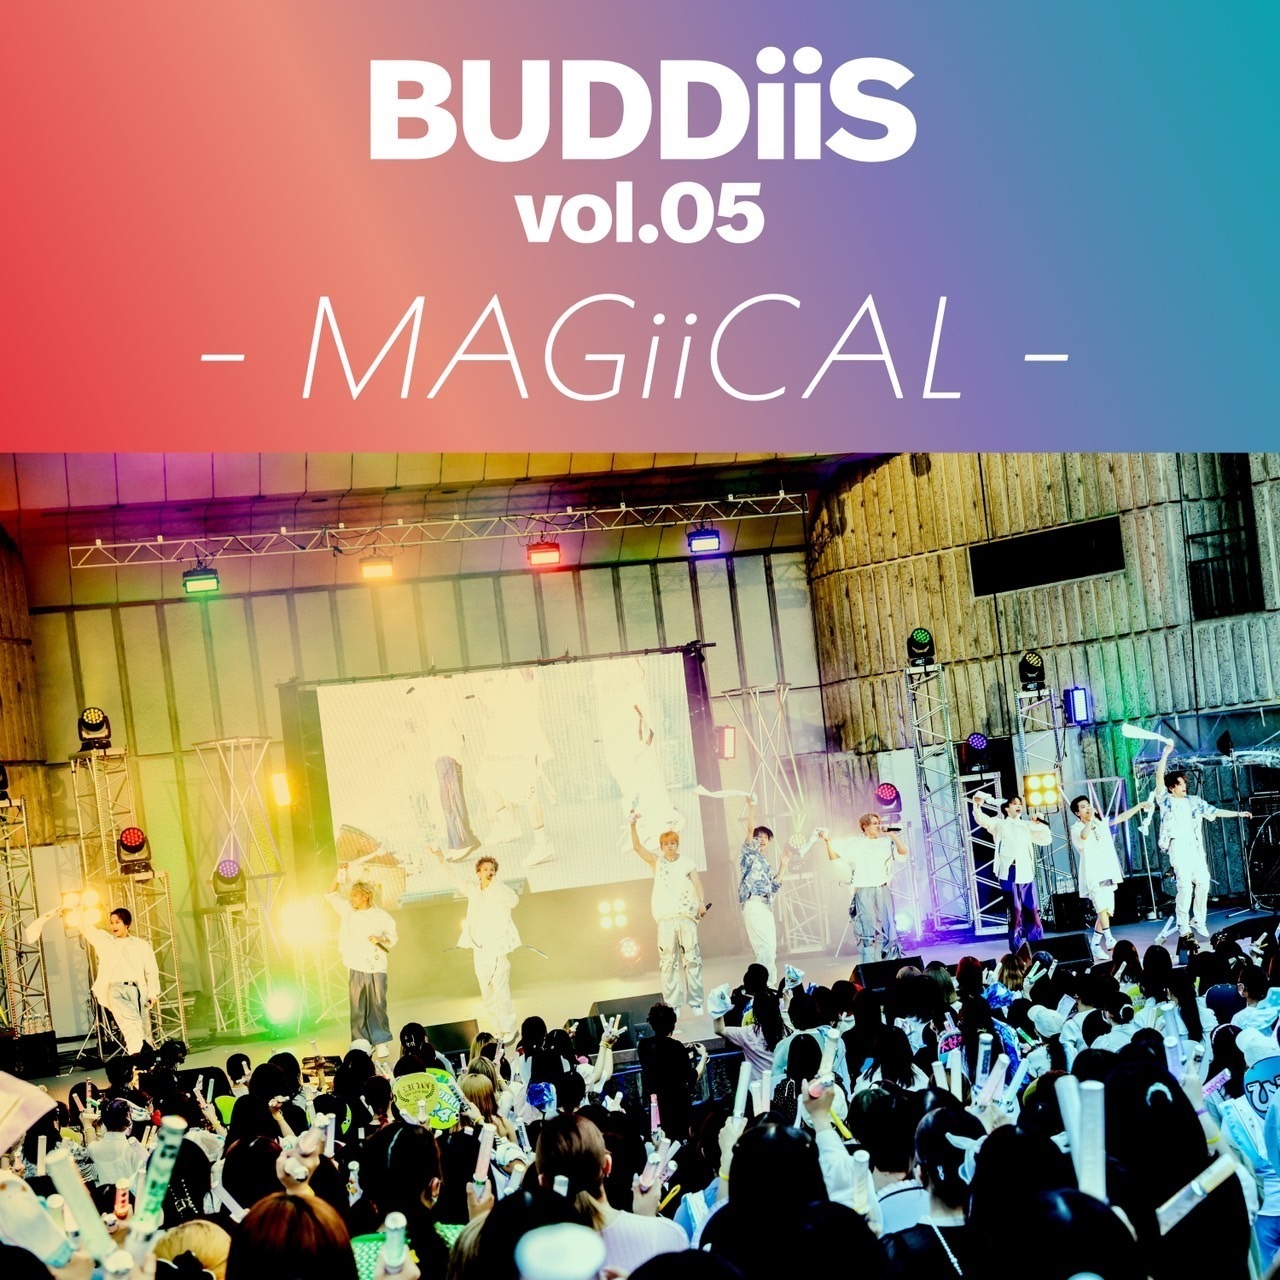 BUDDiiS vol.05 - MAGiiCAL - 」ライブセットリスト公開!!! | BUDDiiS ...